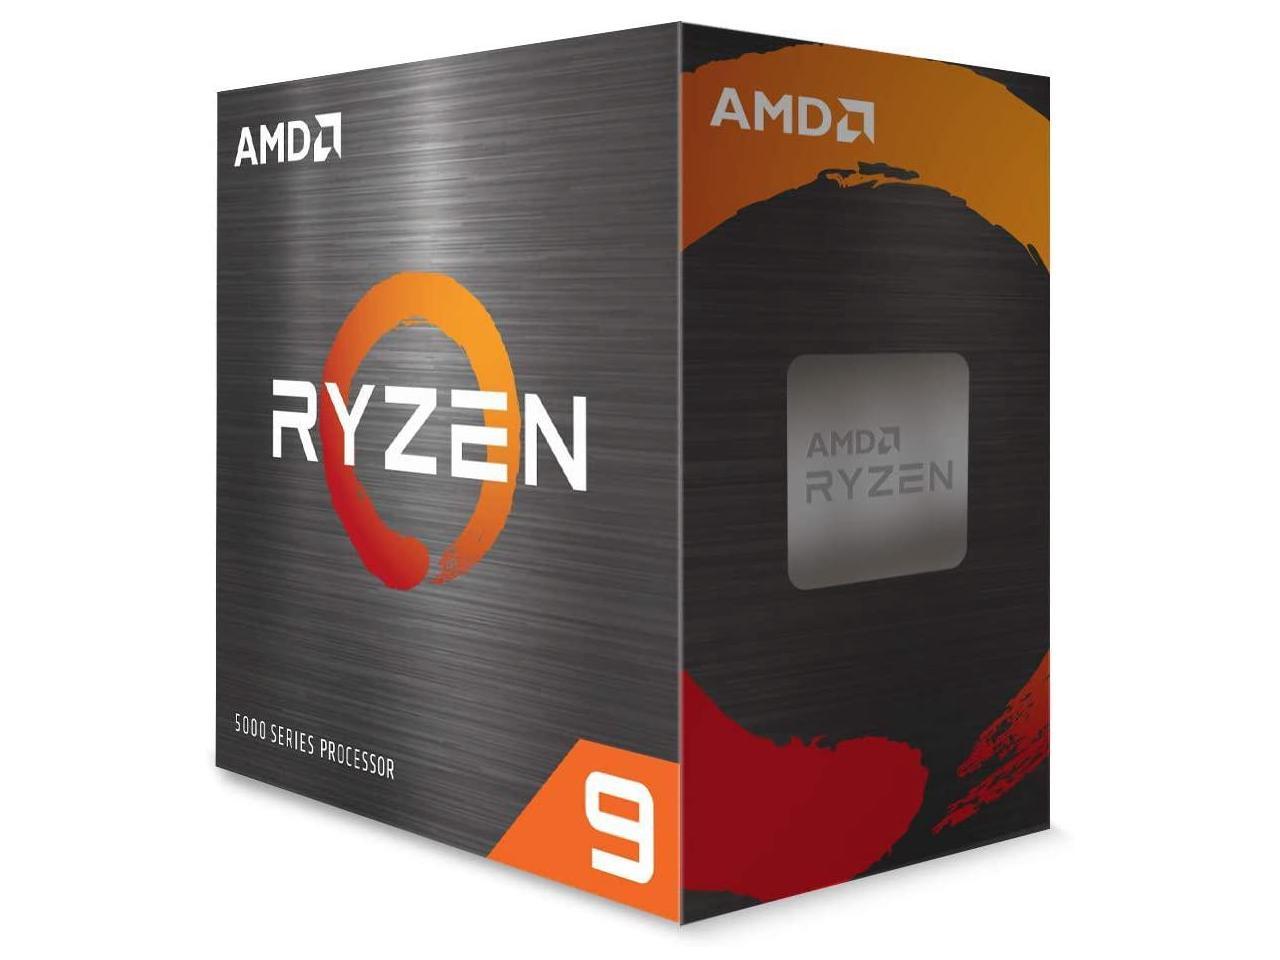 AMD Ryzen 9 5950X 16-Core 3.4 GHz AM4 Desktop Processor $699